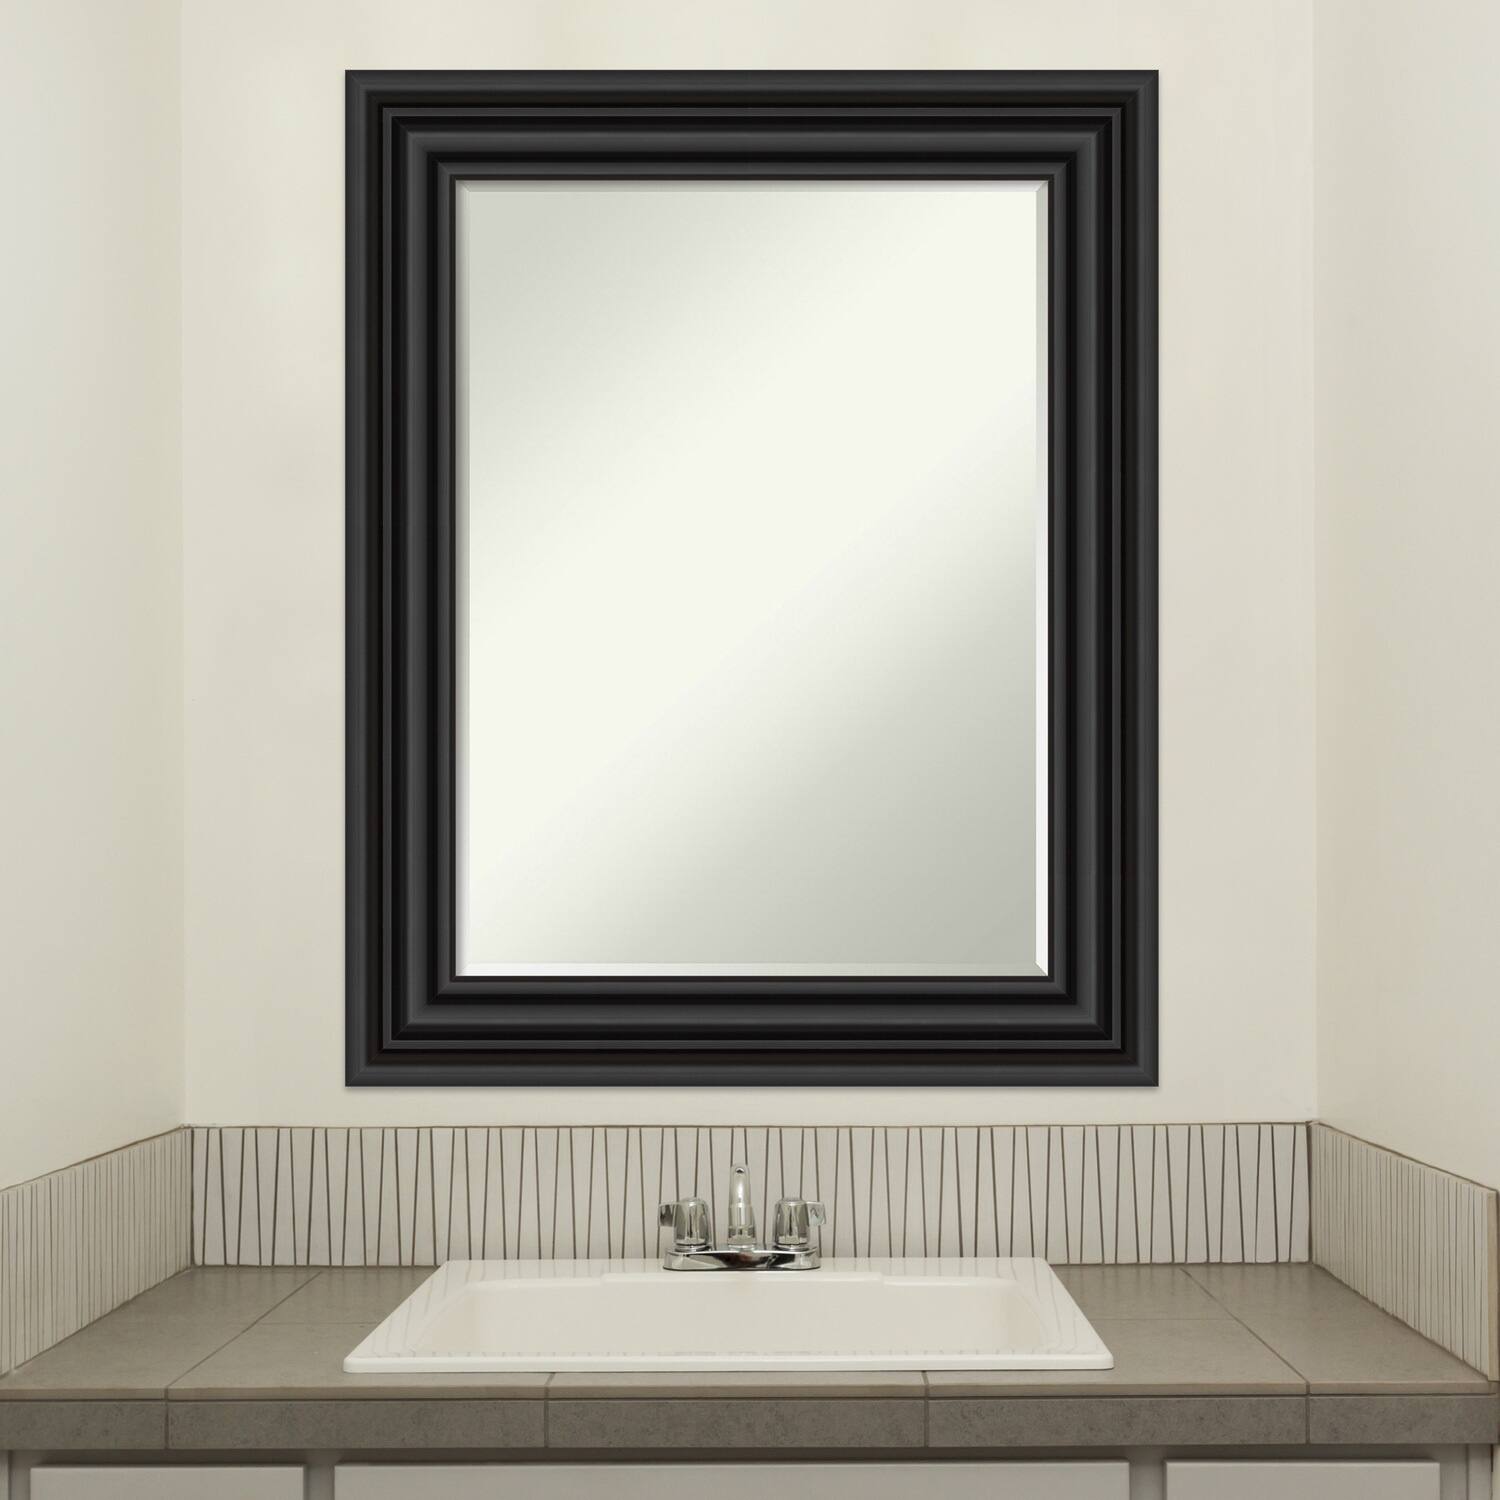 Petite Bevel Bathroom Wall Mirror - Colonial Black Frame - Colonial Black - 24 x 30 in